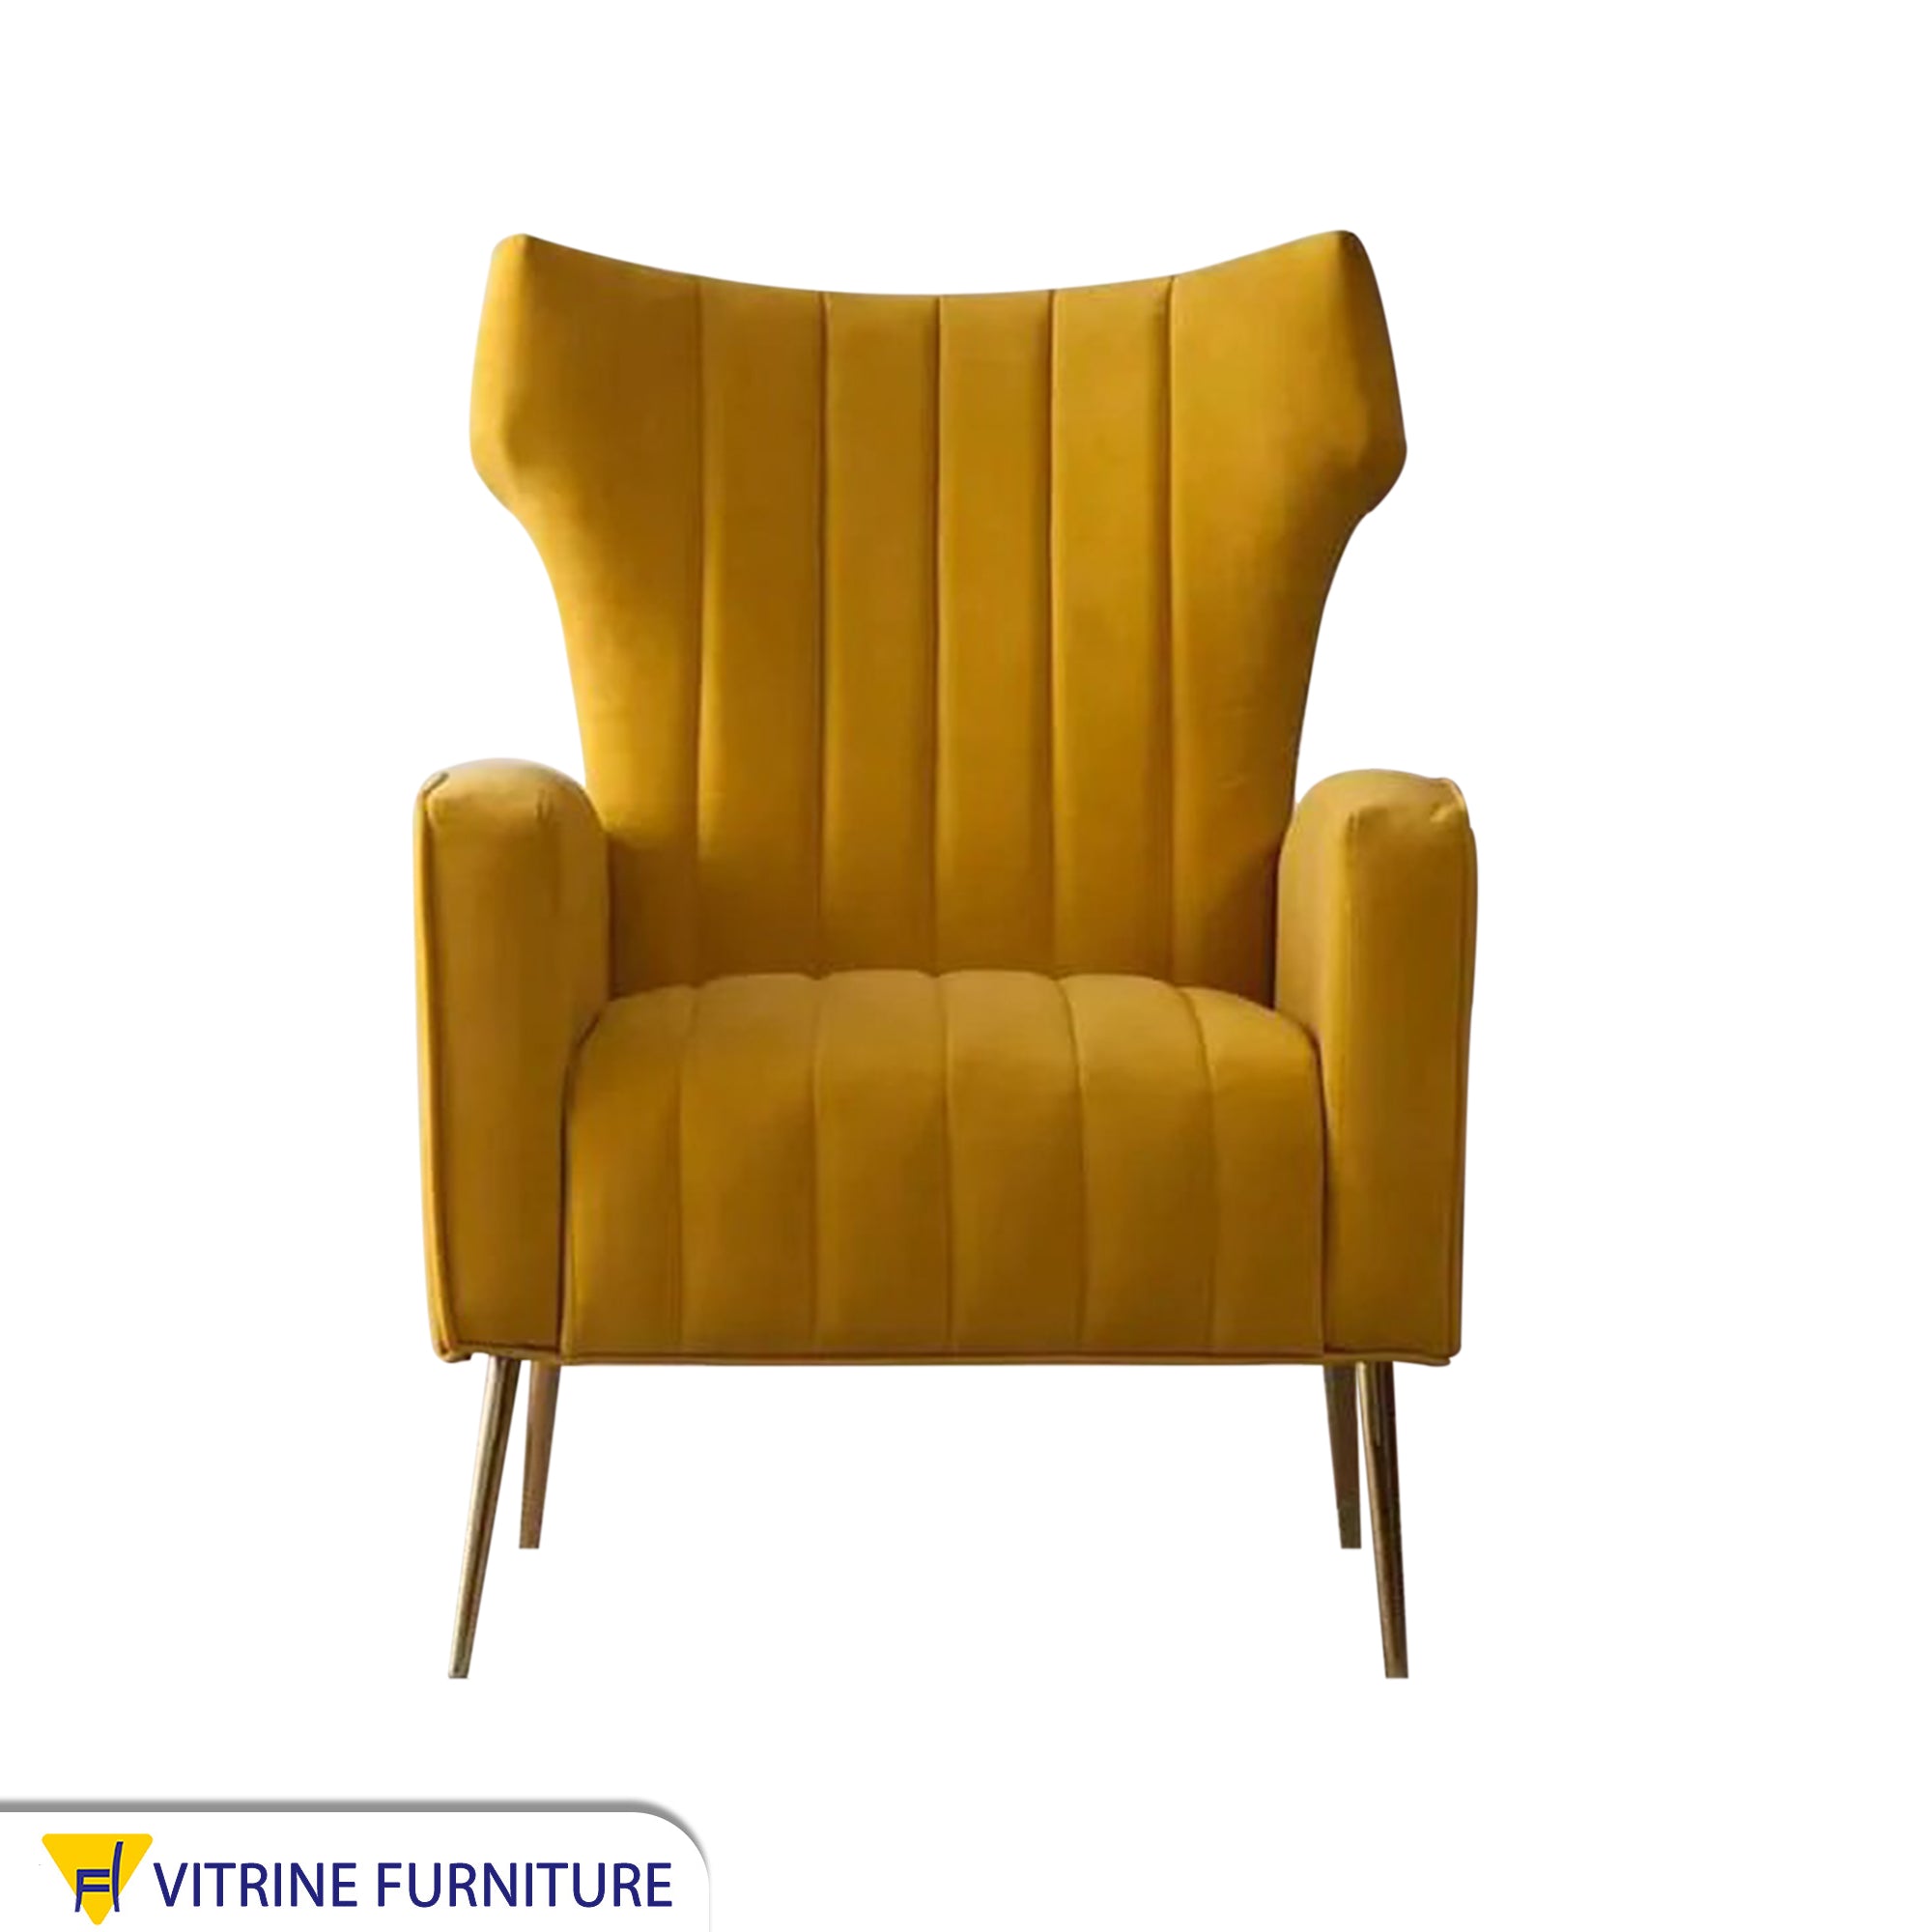 Yellow decorative armchair